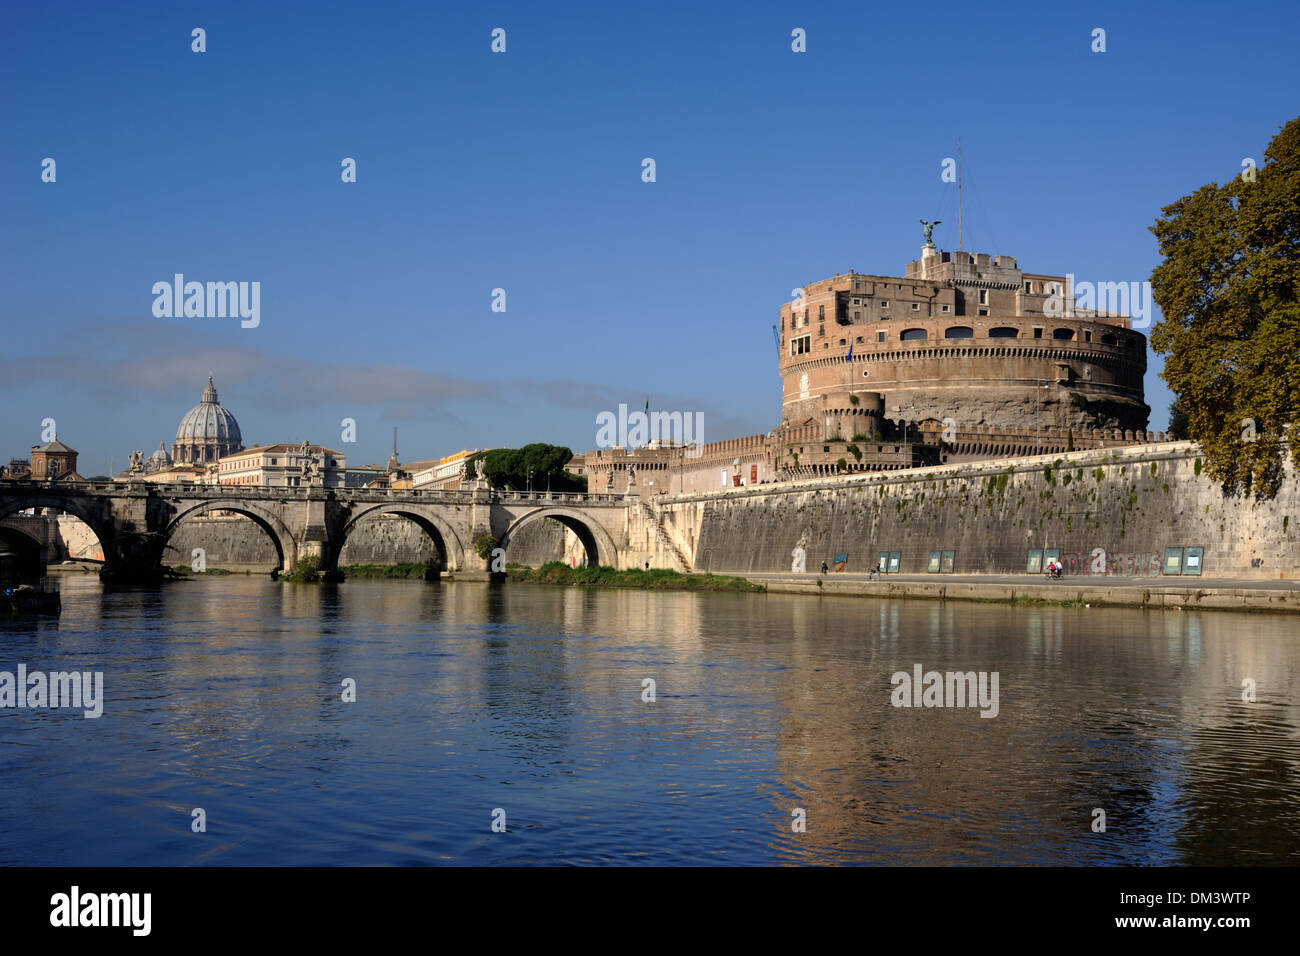 Italy, Rome, Tiber river, Castel Sant'Angelo, bridge and St Peter's basilica Stock Photo